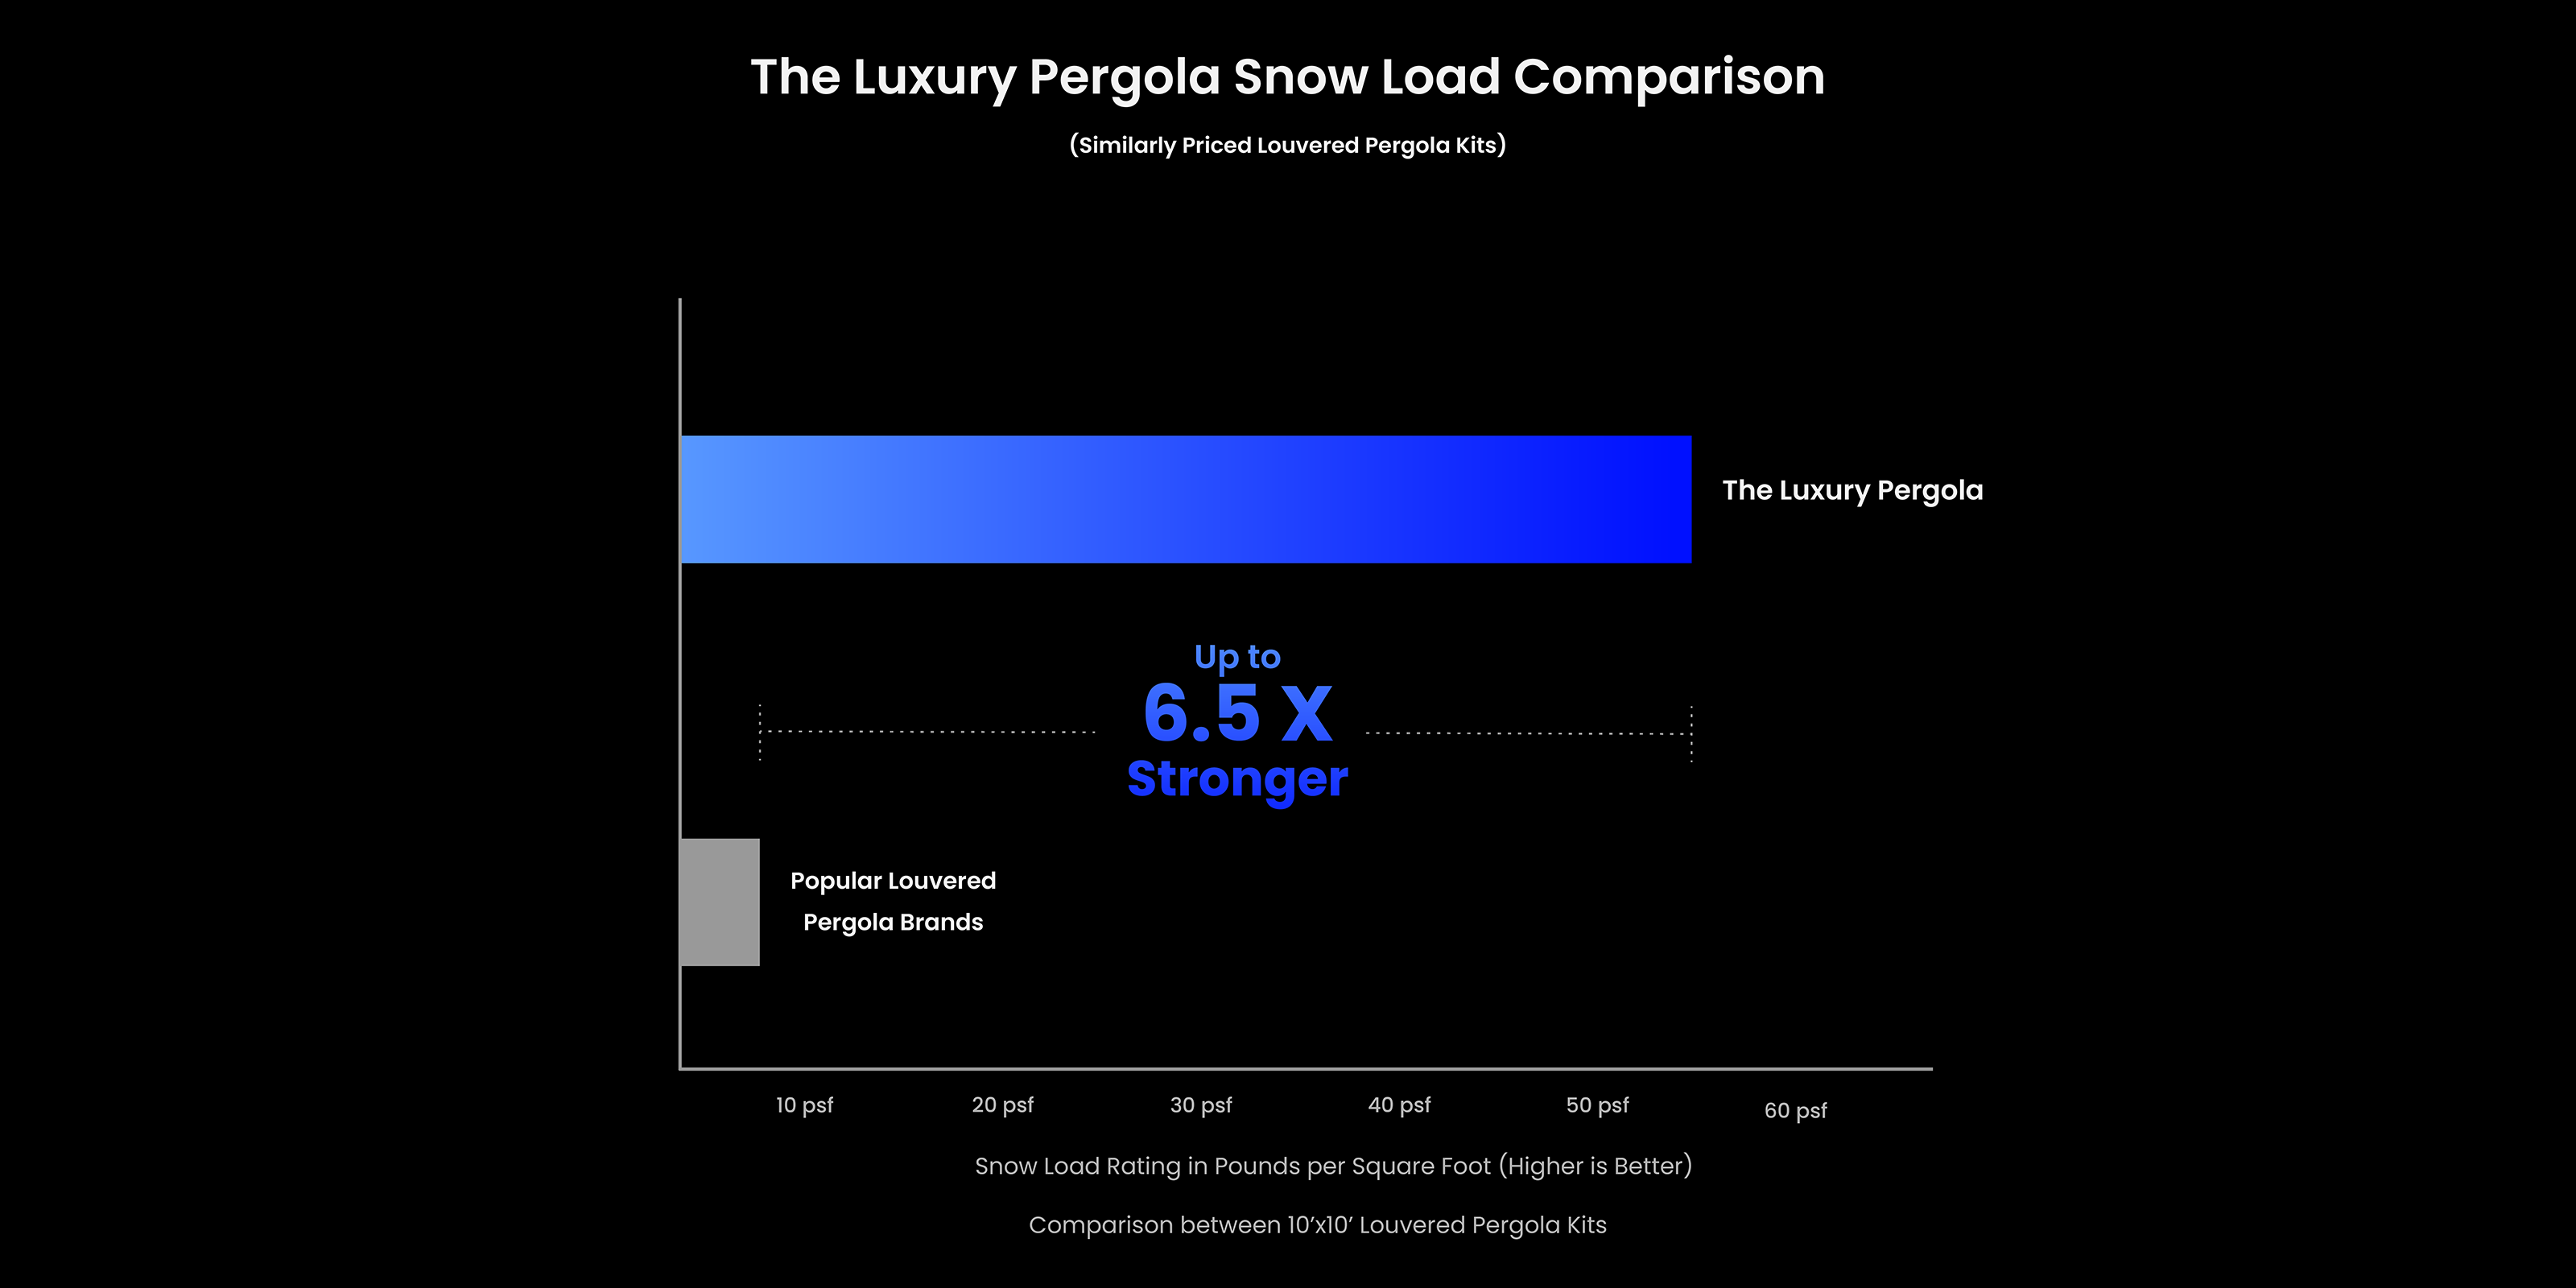 The Luxury Pergola Snow Load comparison